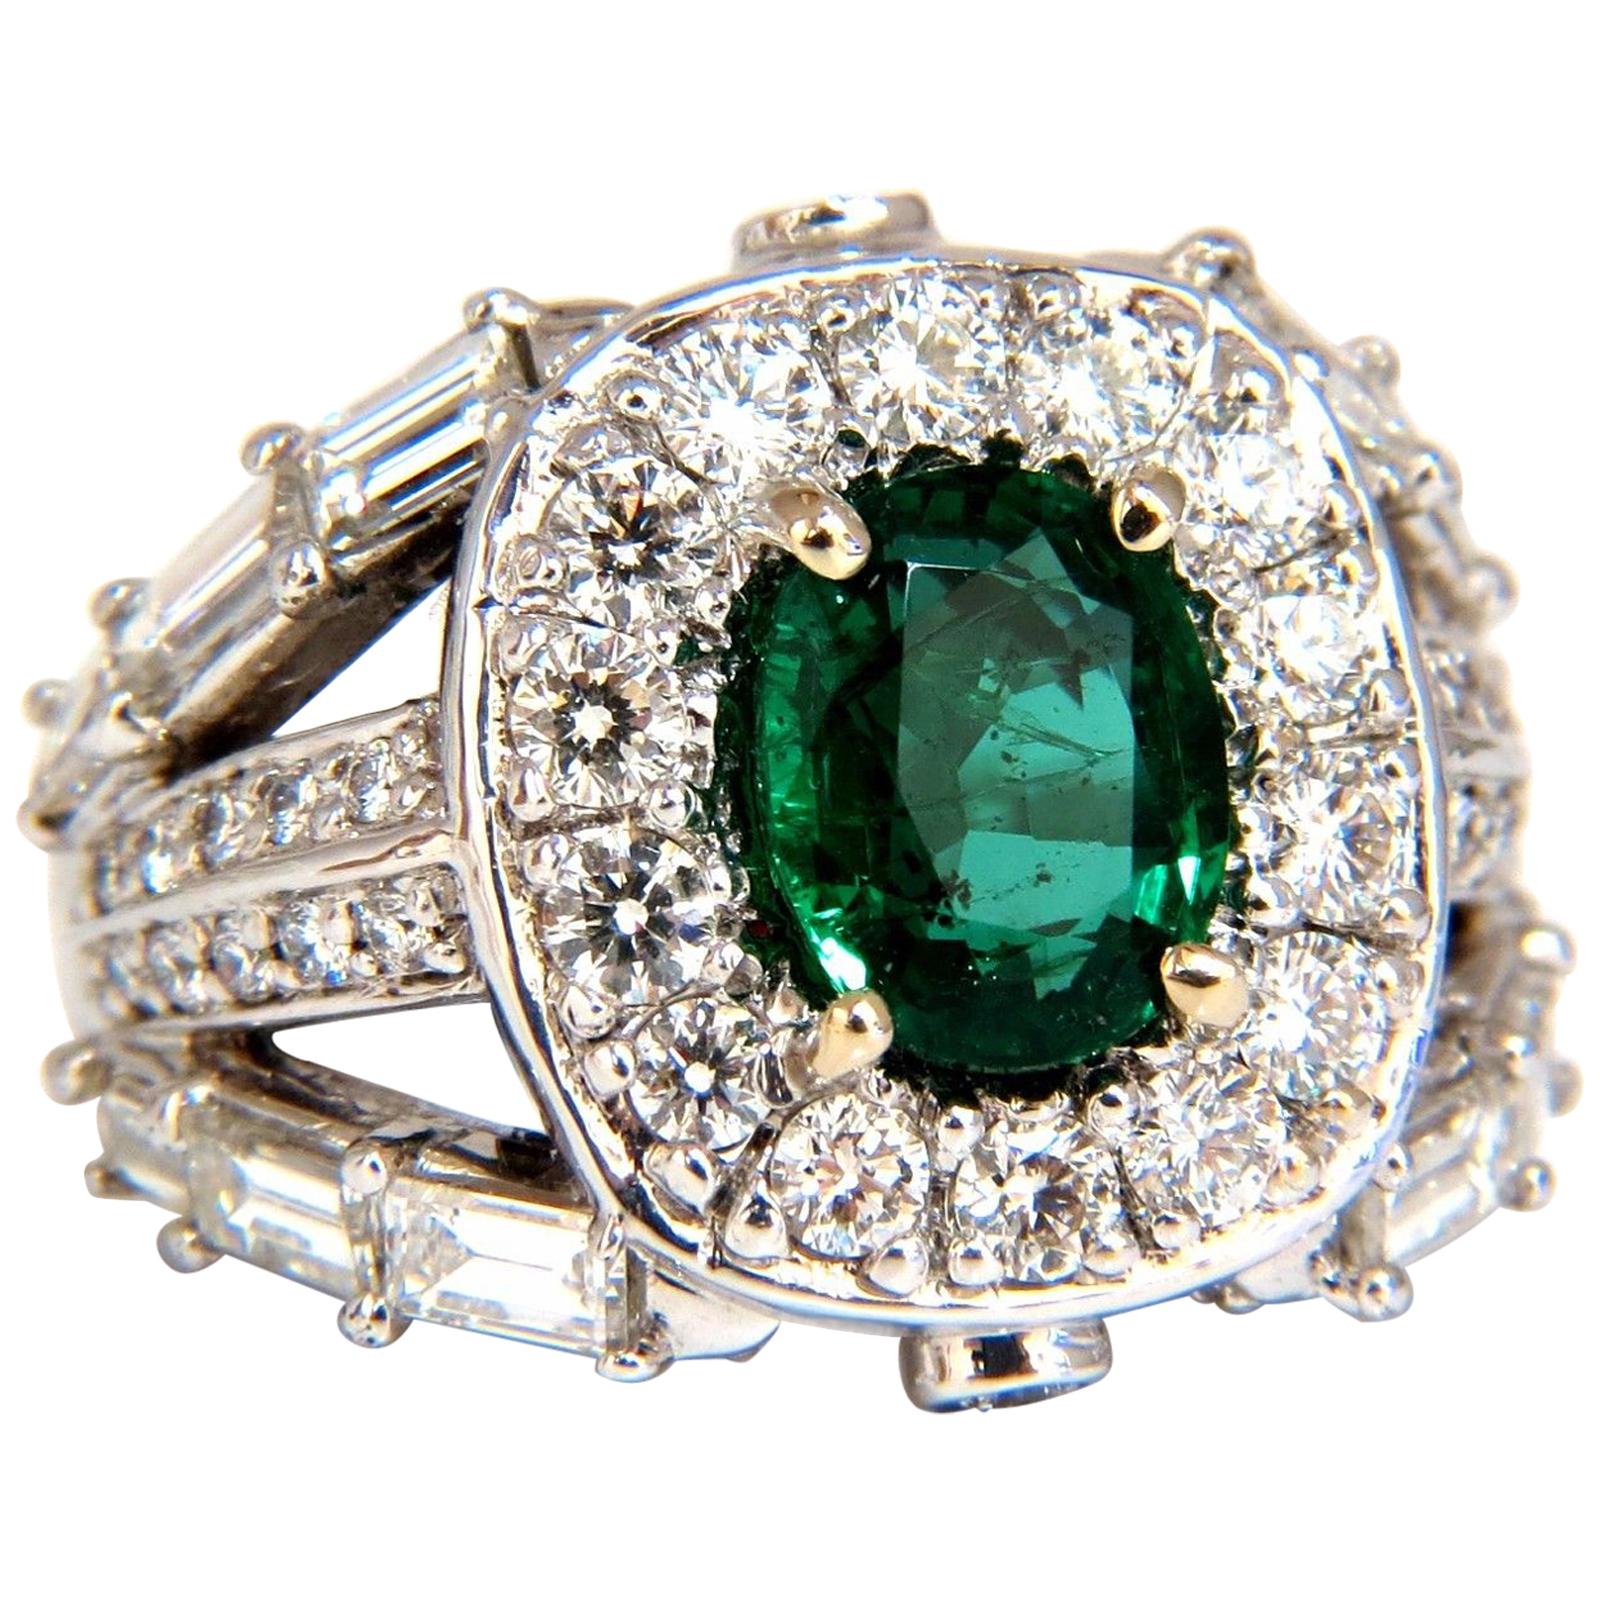 6.00 Carat Natural Vivid Bright Green Emerald Diamonds Ring 14 Karat